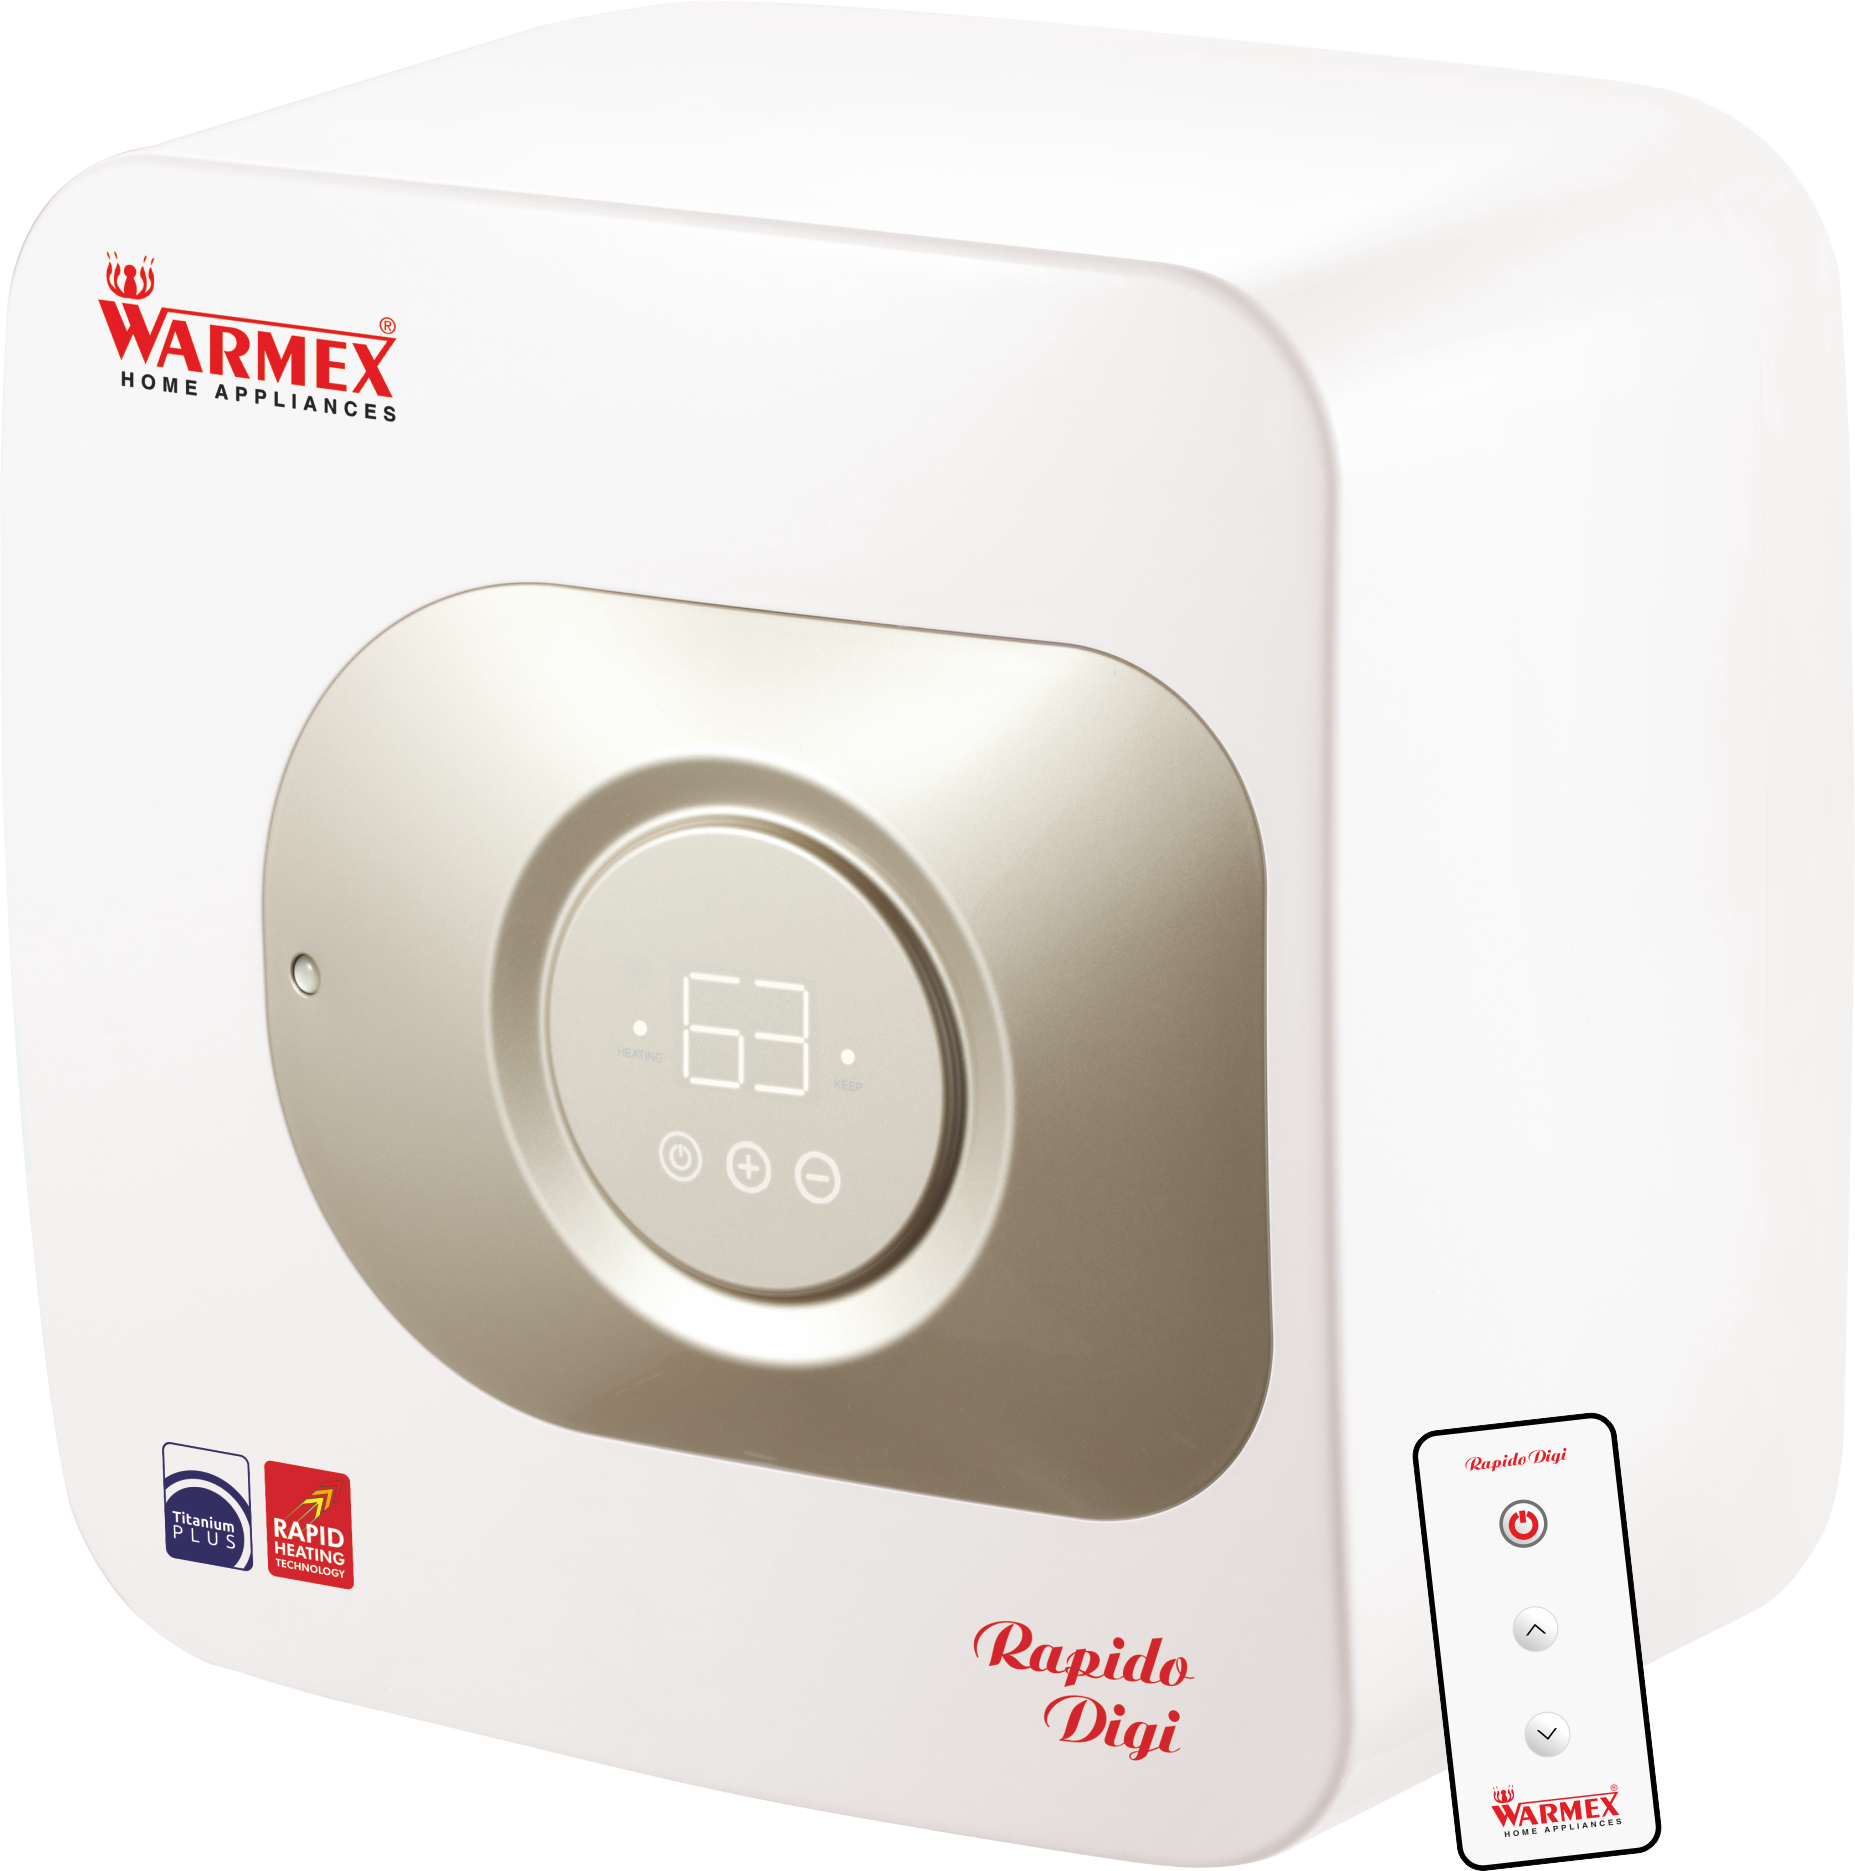 WARMEX STORAGE ELECTRIC WATER HEATER - HIGH PRESSURE (DIGITAL) RAPIDO DIGI 25 warmexhomeappliances2